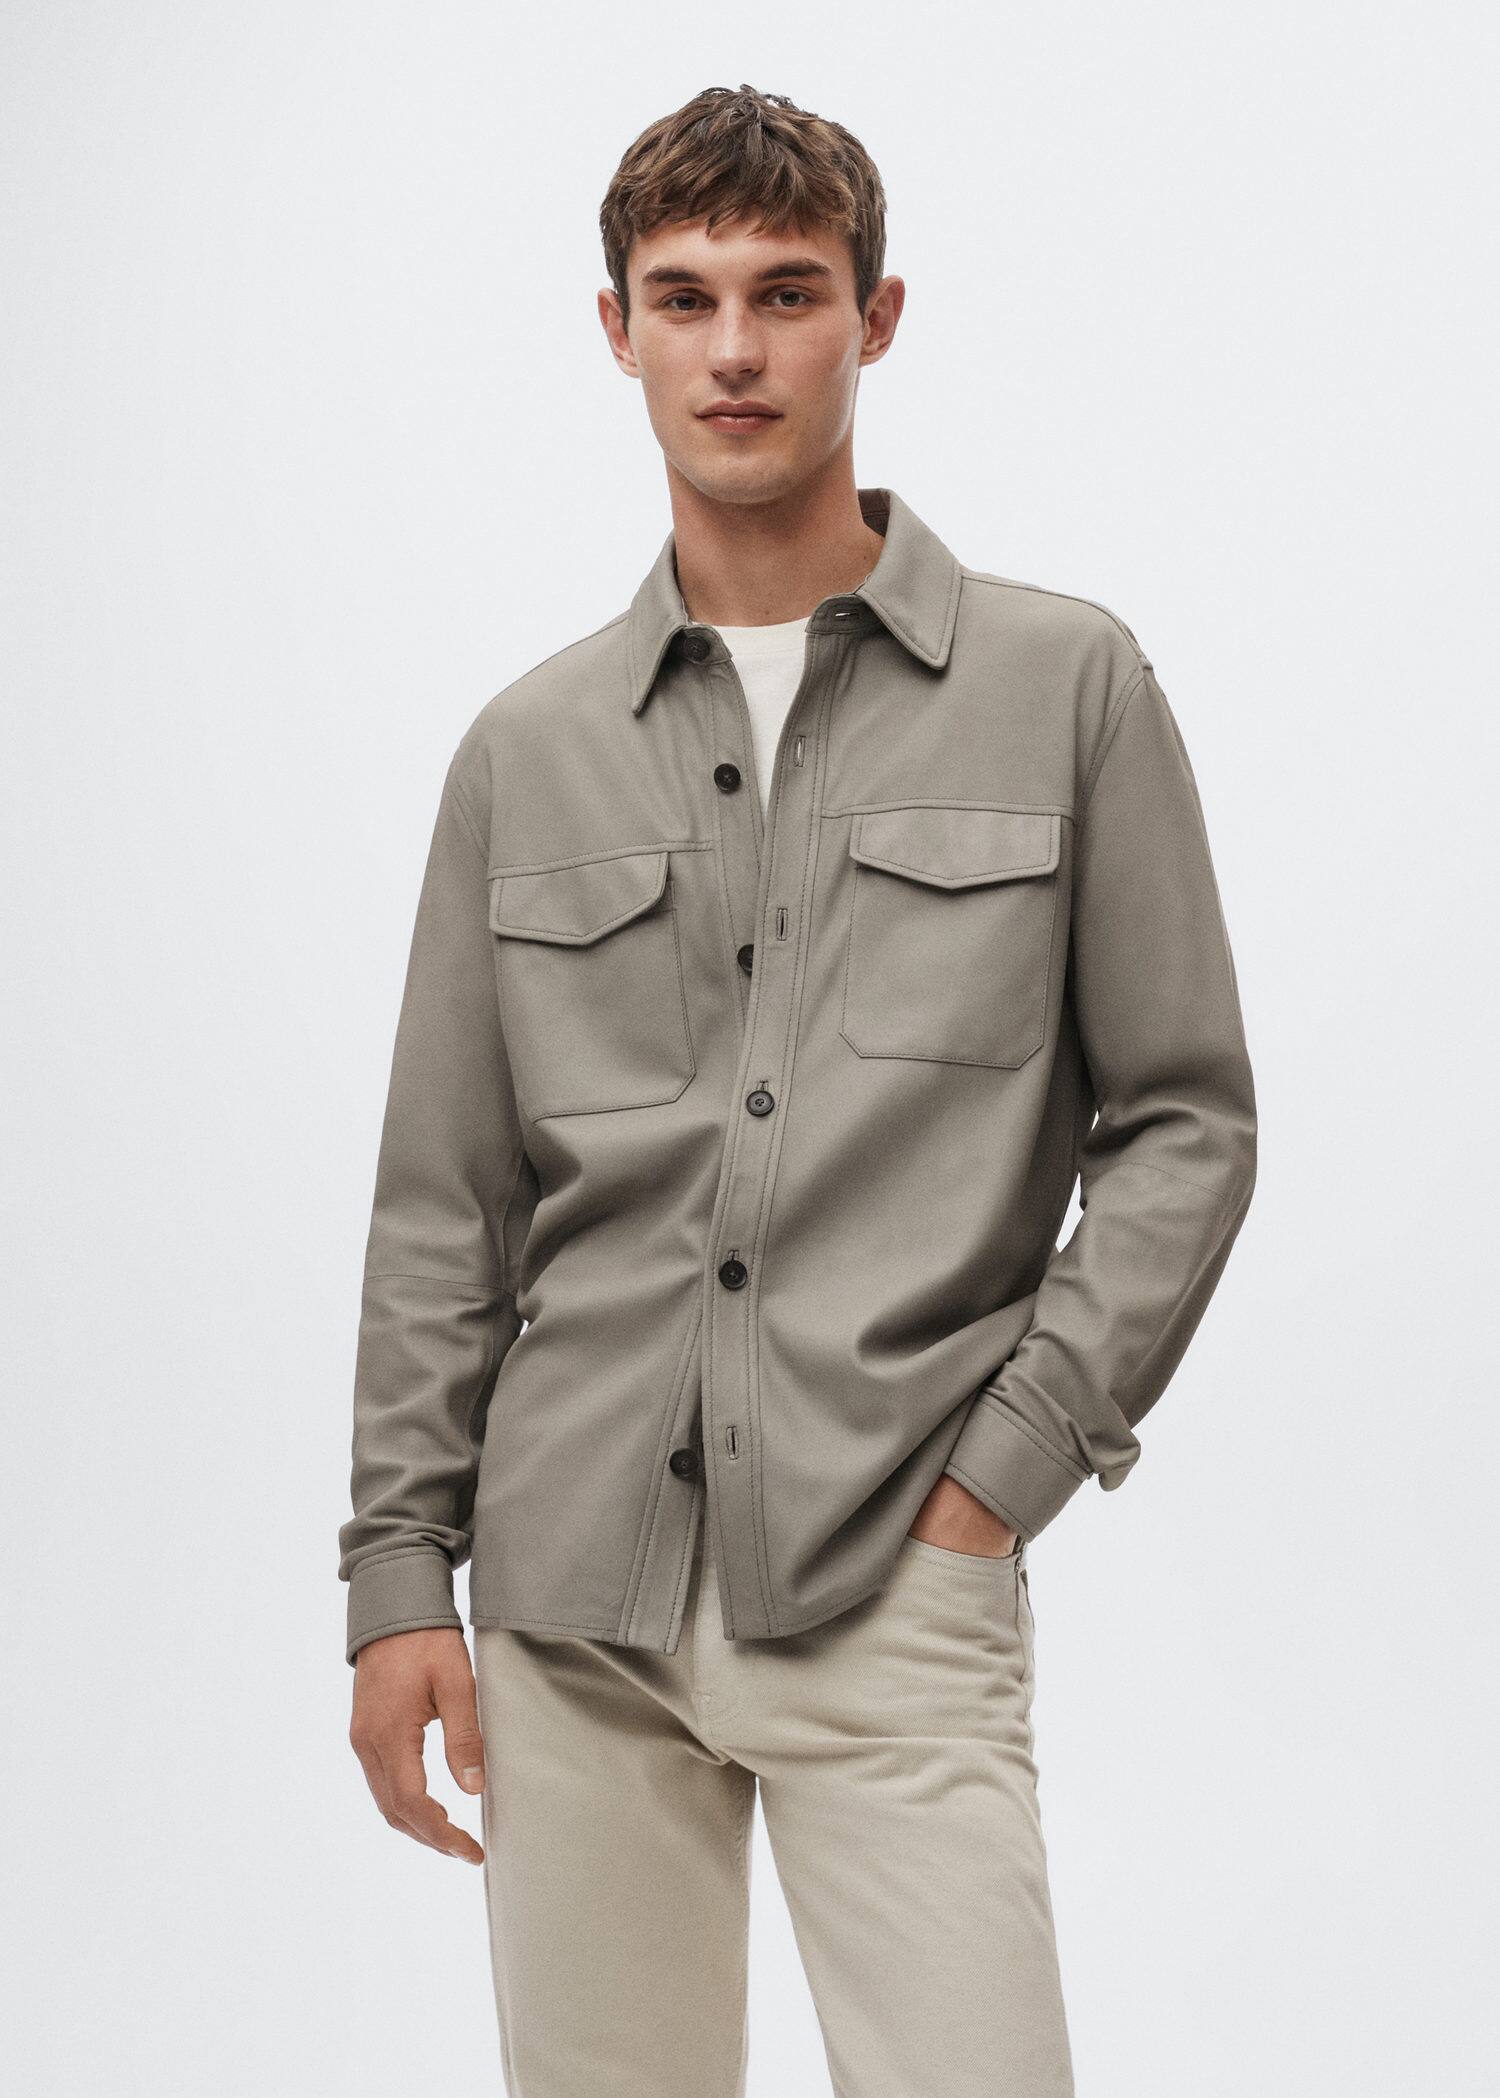 Leather overshirt with pockets - Medium plane